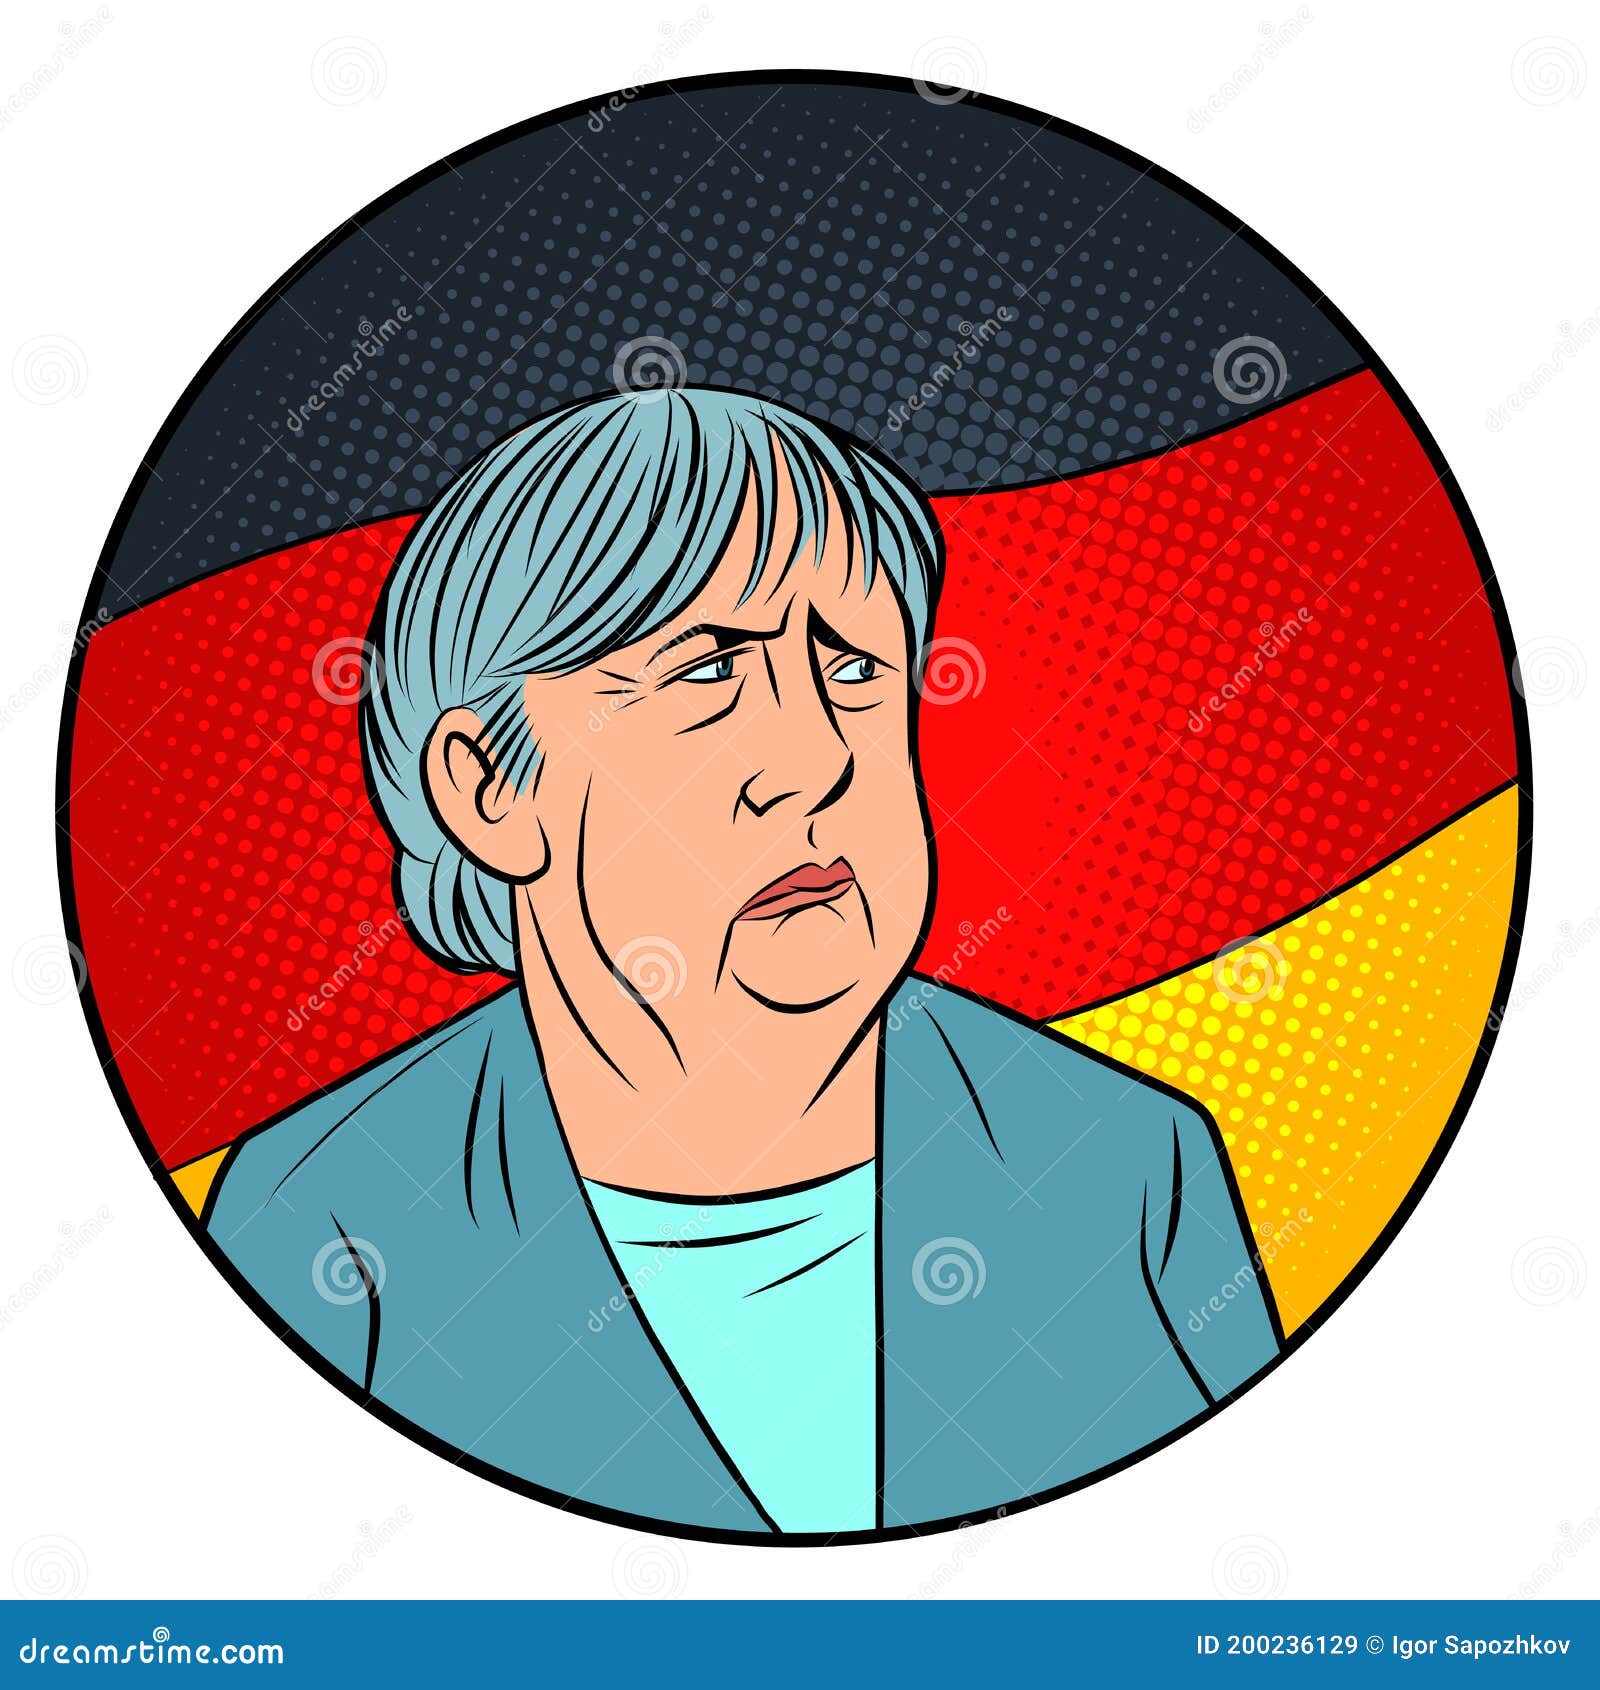 Angela Merkel Portrait Sketch Cartoon Vector ...